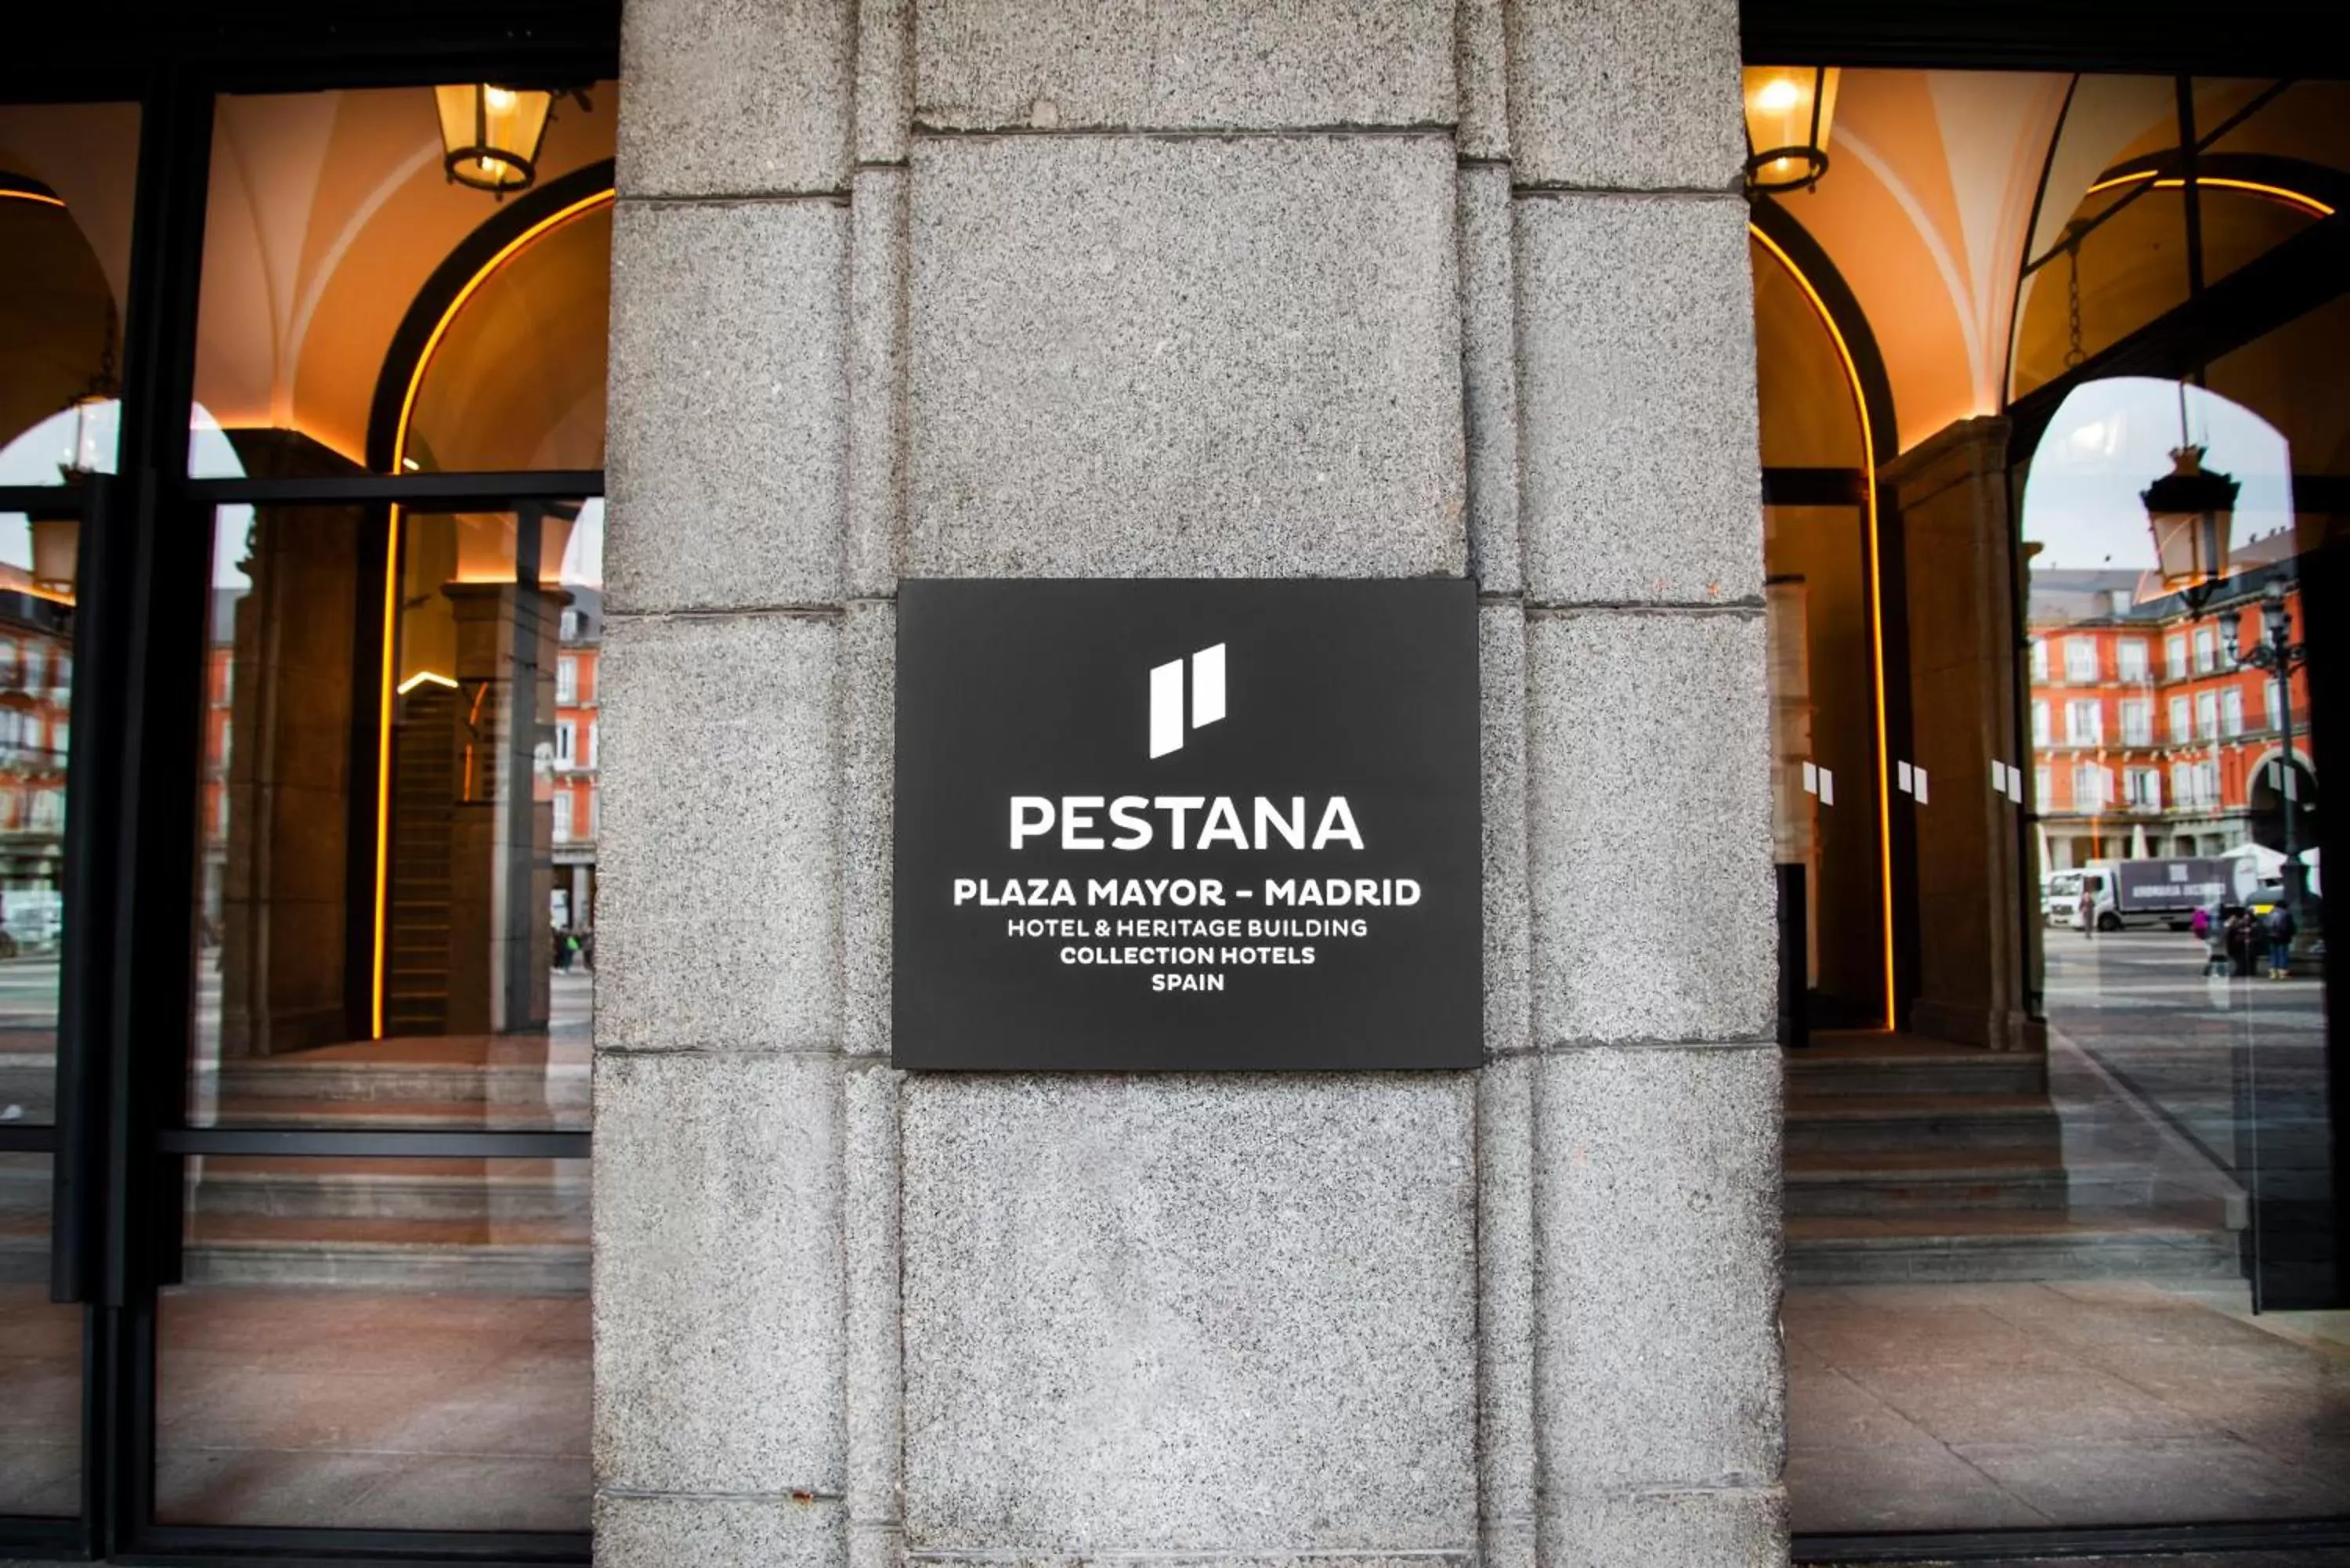 Property logo or sign in Pestana Plaza Mayor Madrid